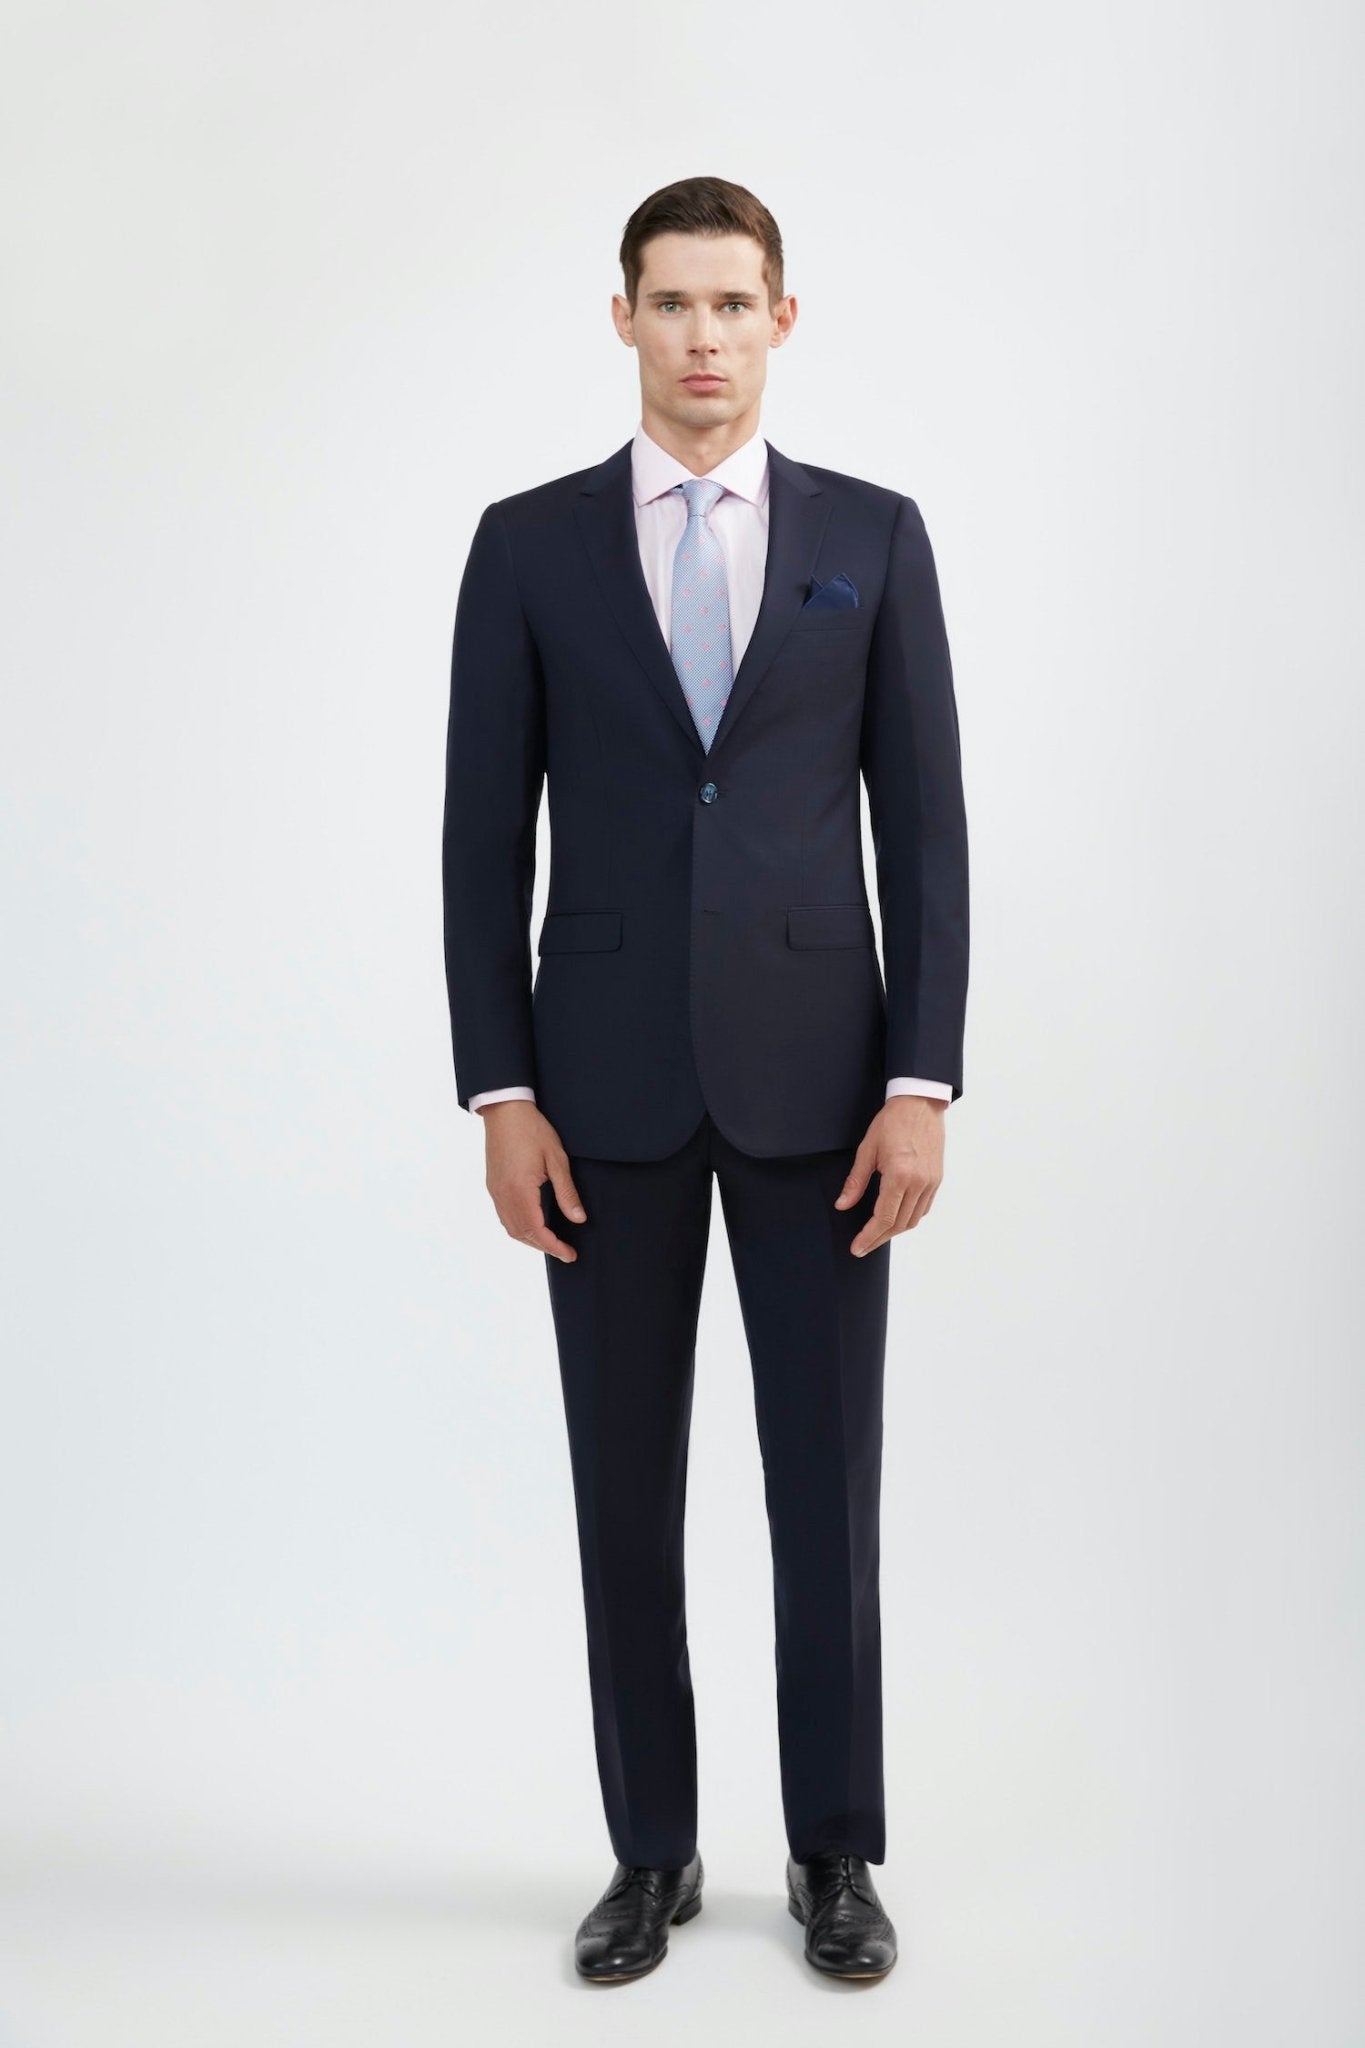 100% Merino Wool Royal Blue Pants – Tomasso Black